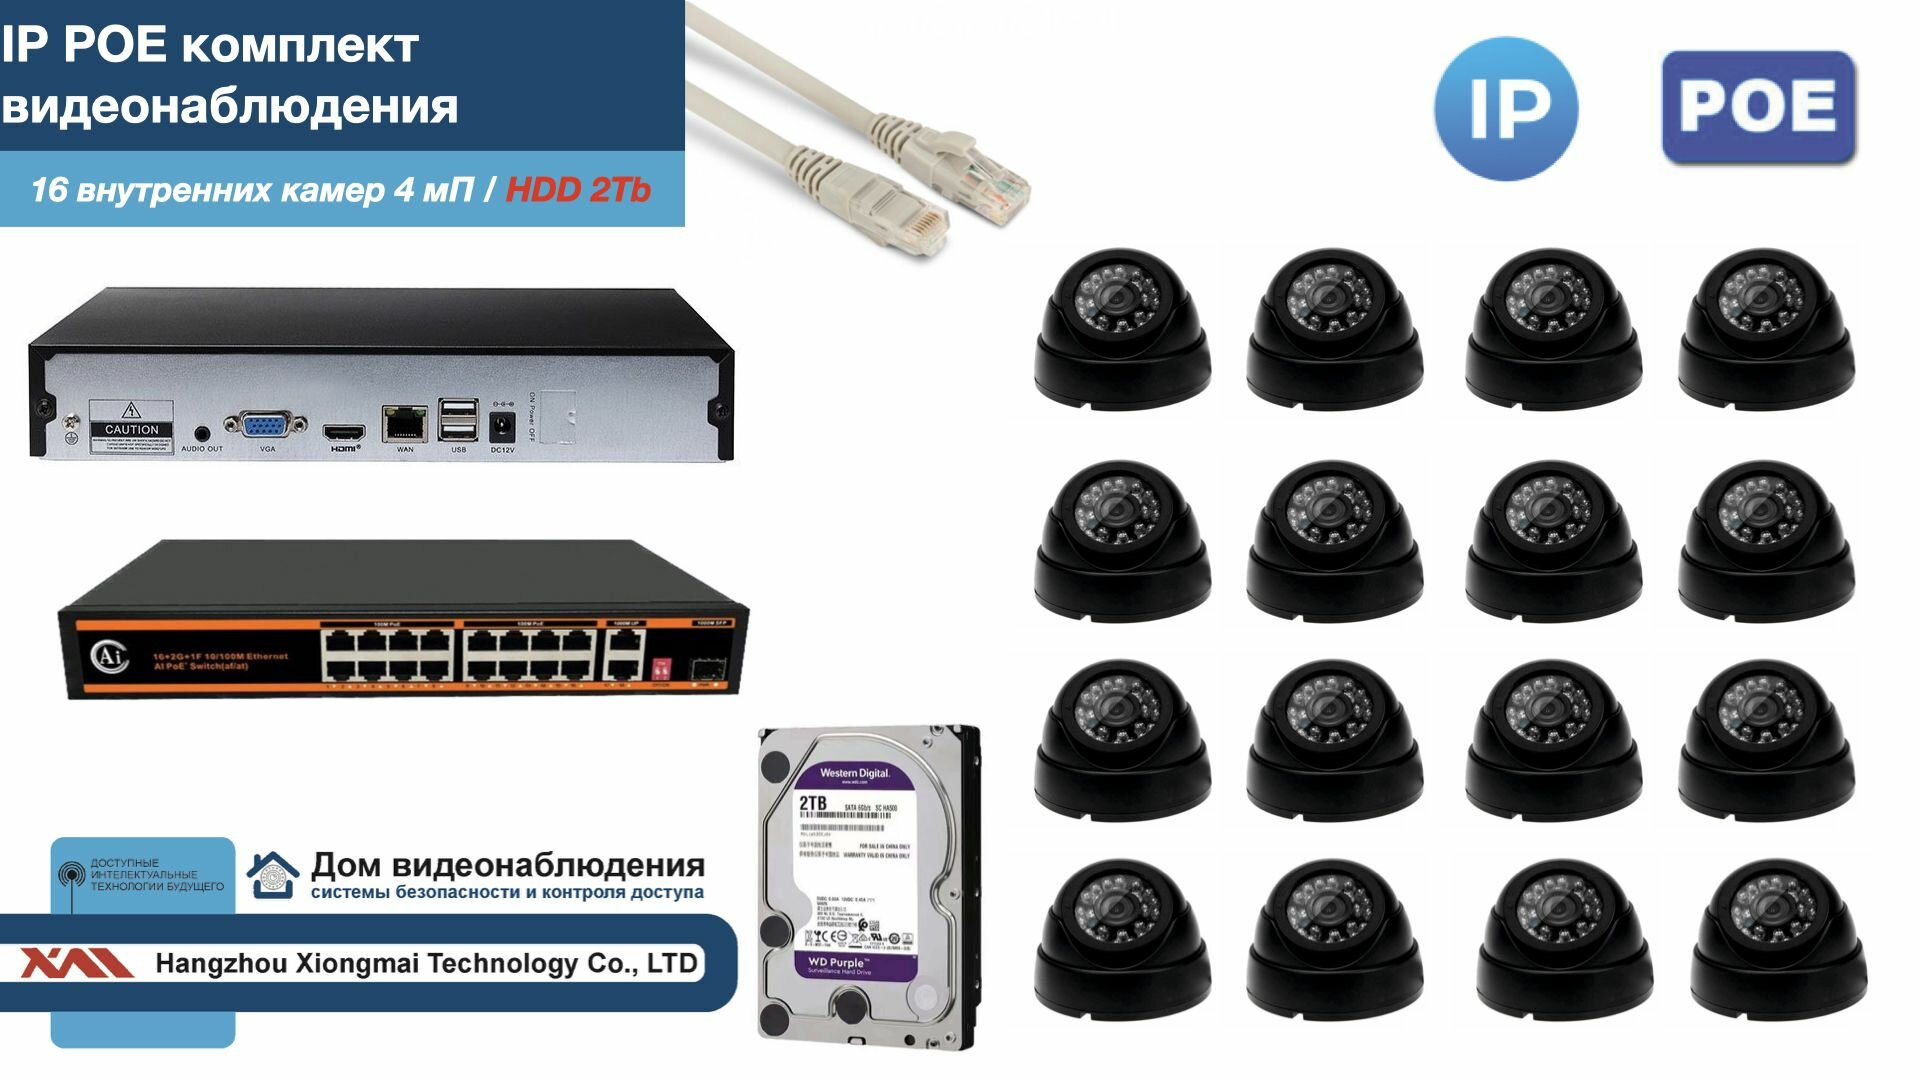 Полный IP POE комплект видеонаблюдения на 16 камер (KIT16IPPOE300B4MP-HDD2Tb)